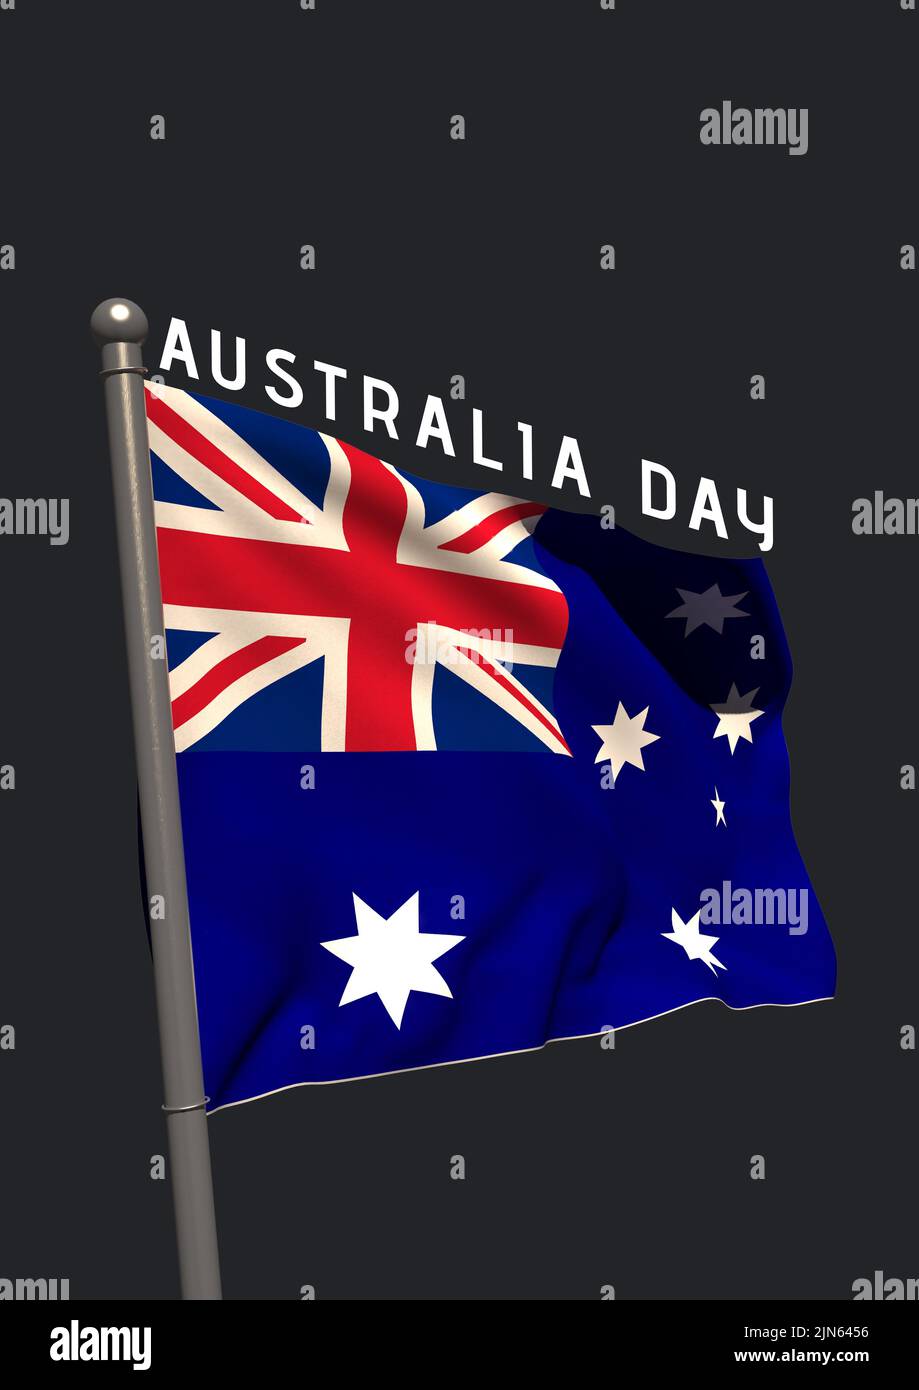 Composition of australia day text over flag of australia on black backgorund Stock Photo